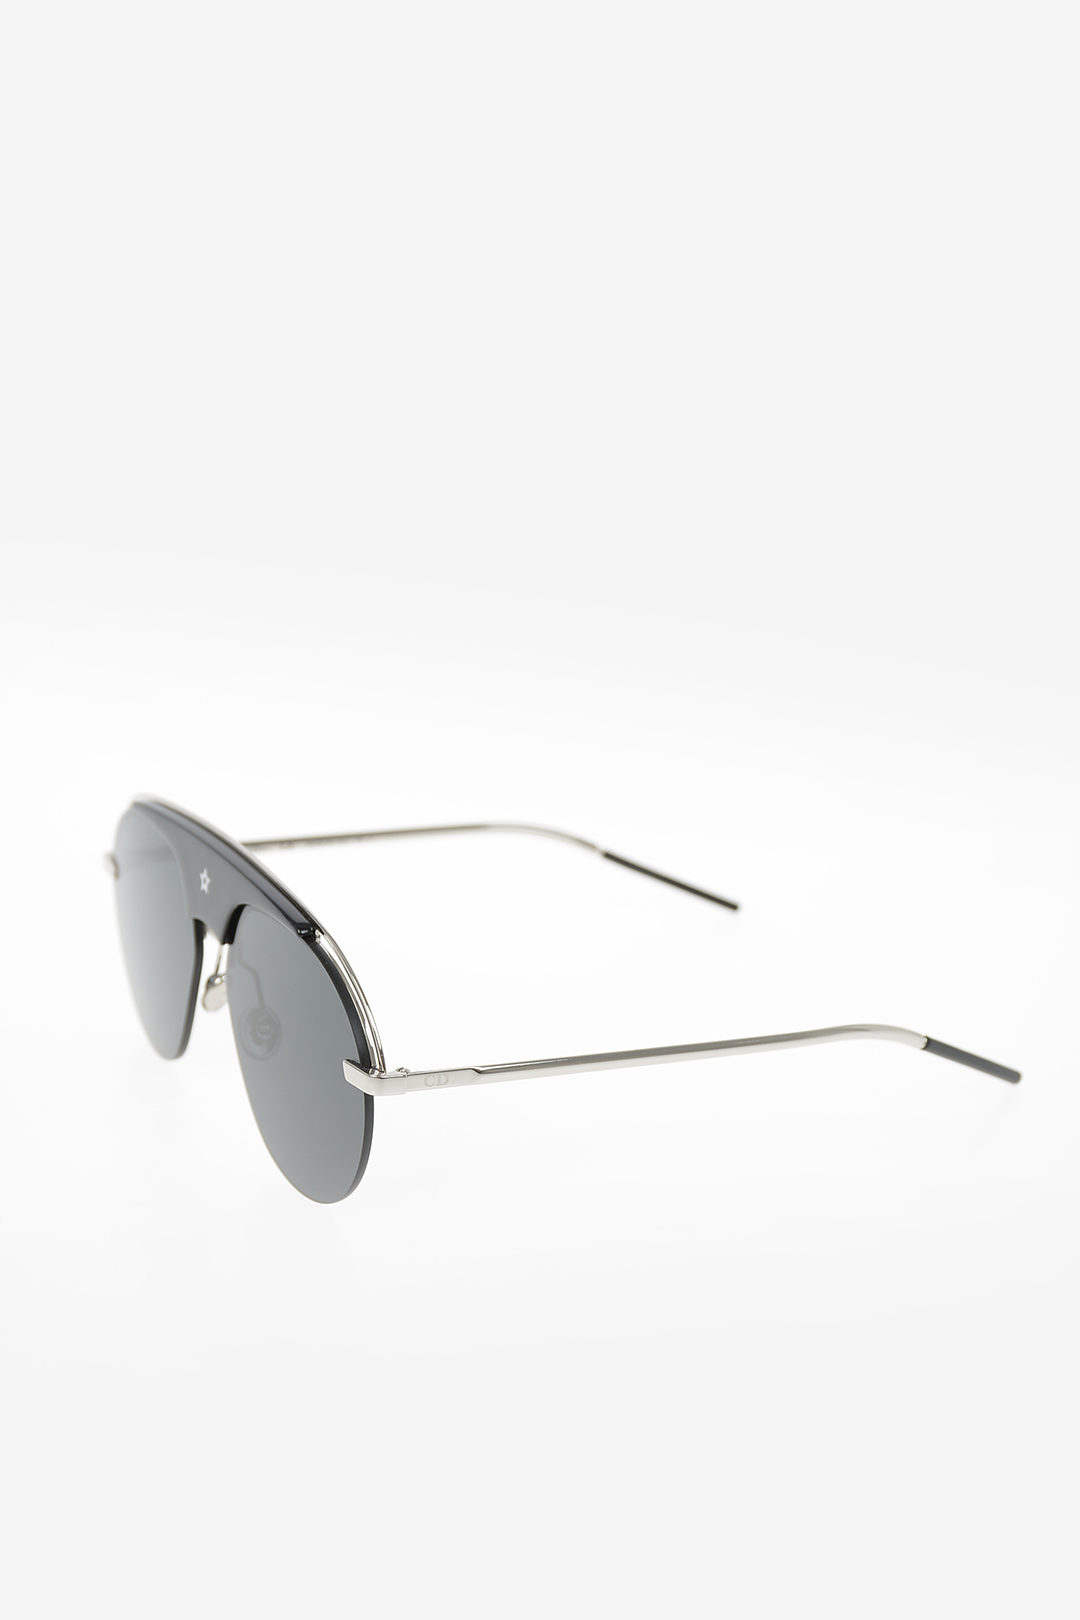 dior evolution sunglasses